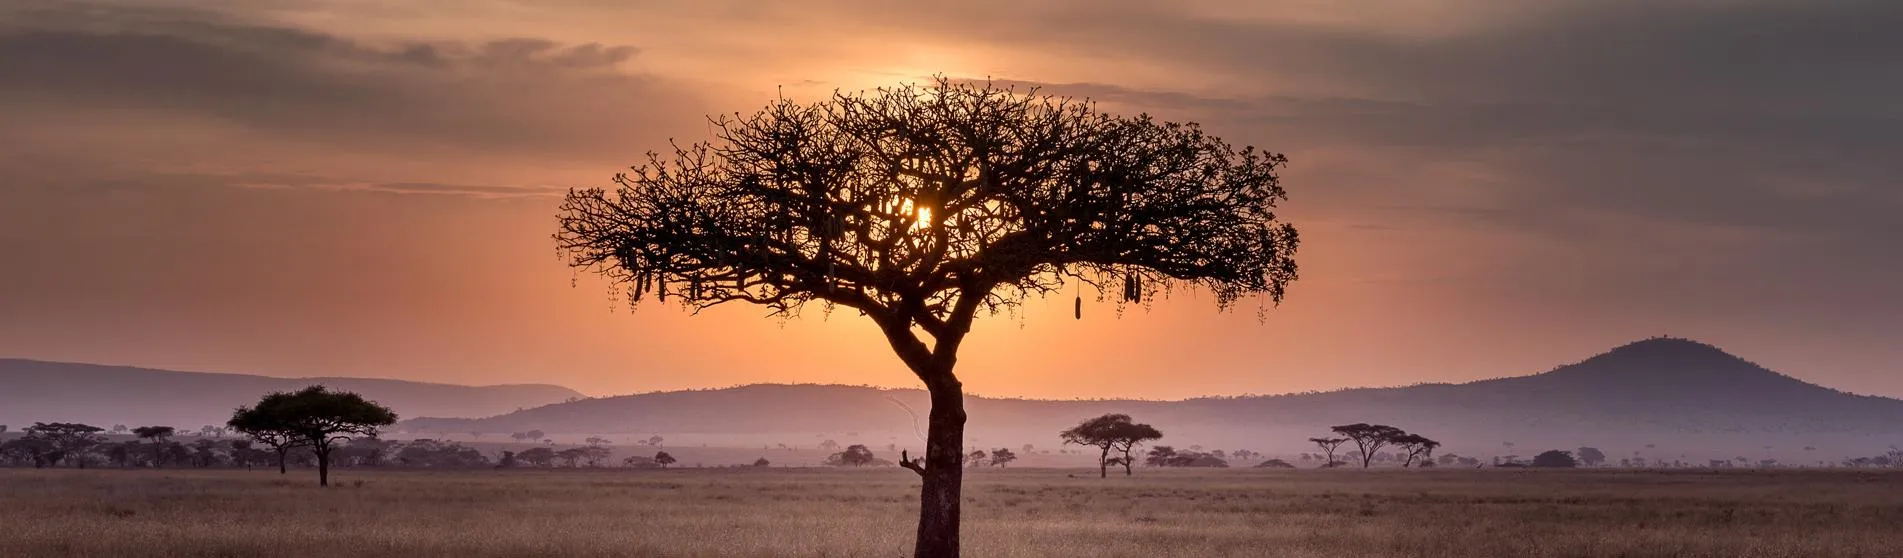 Africa Tree